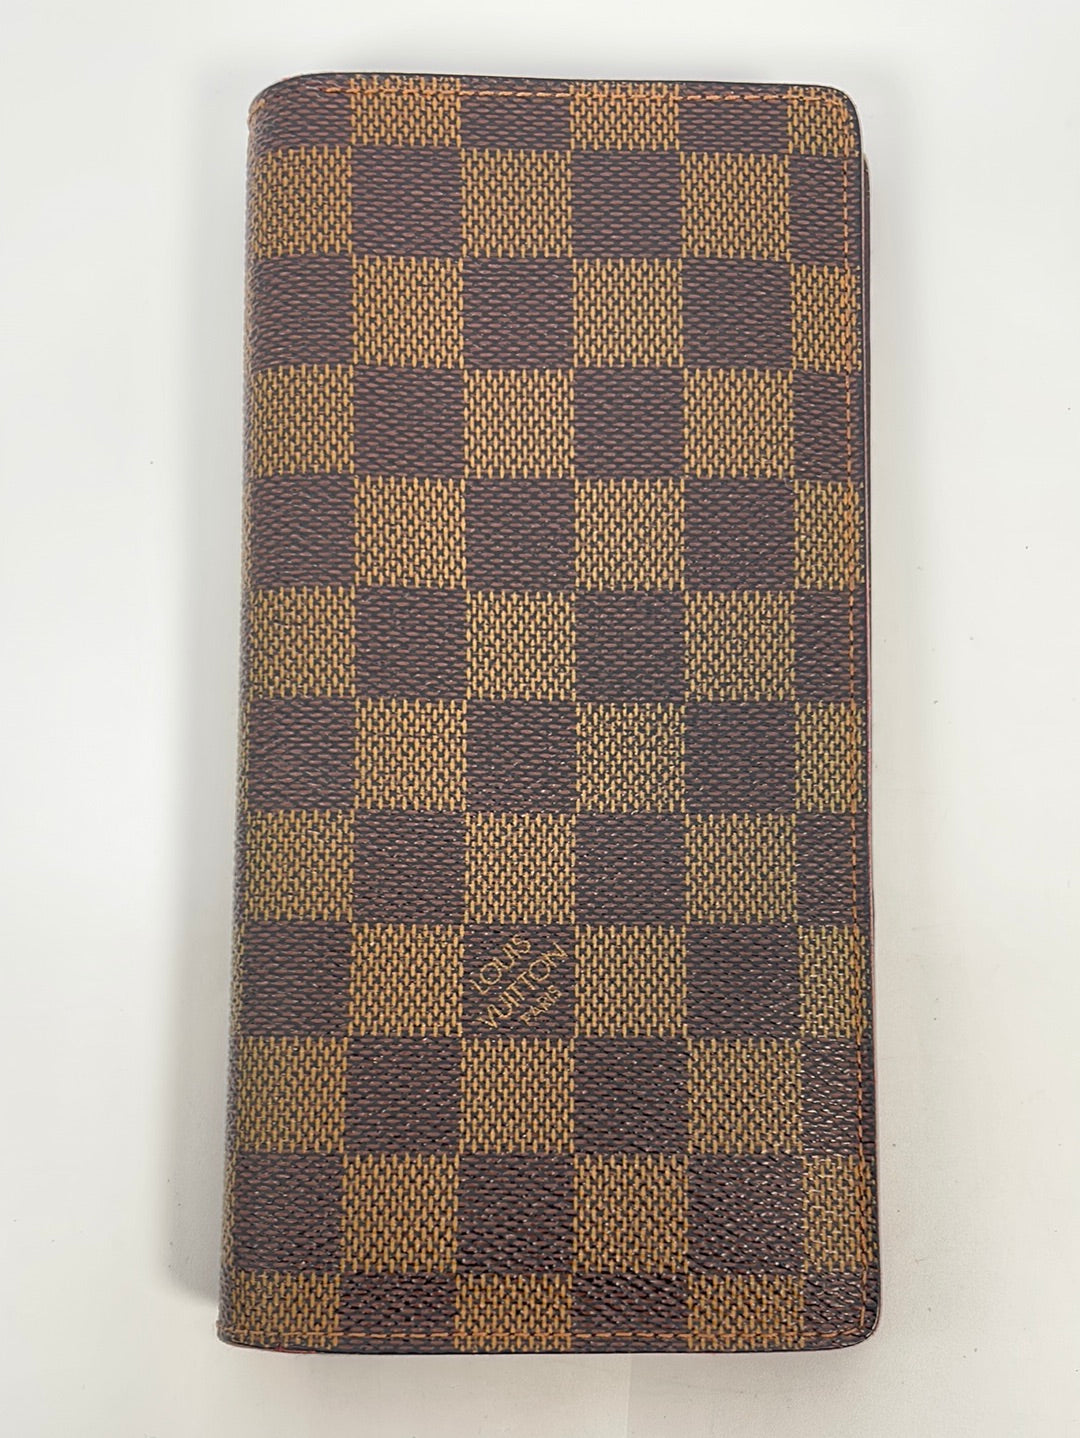  Louis Vuitton N60017 Men's Long Wallet, Damier